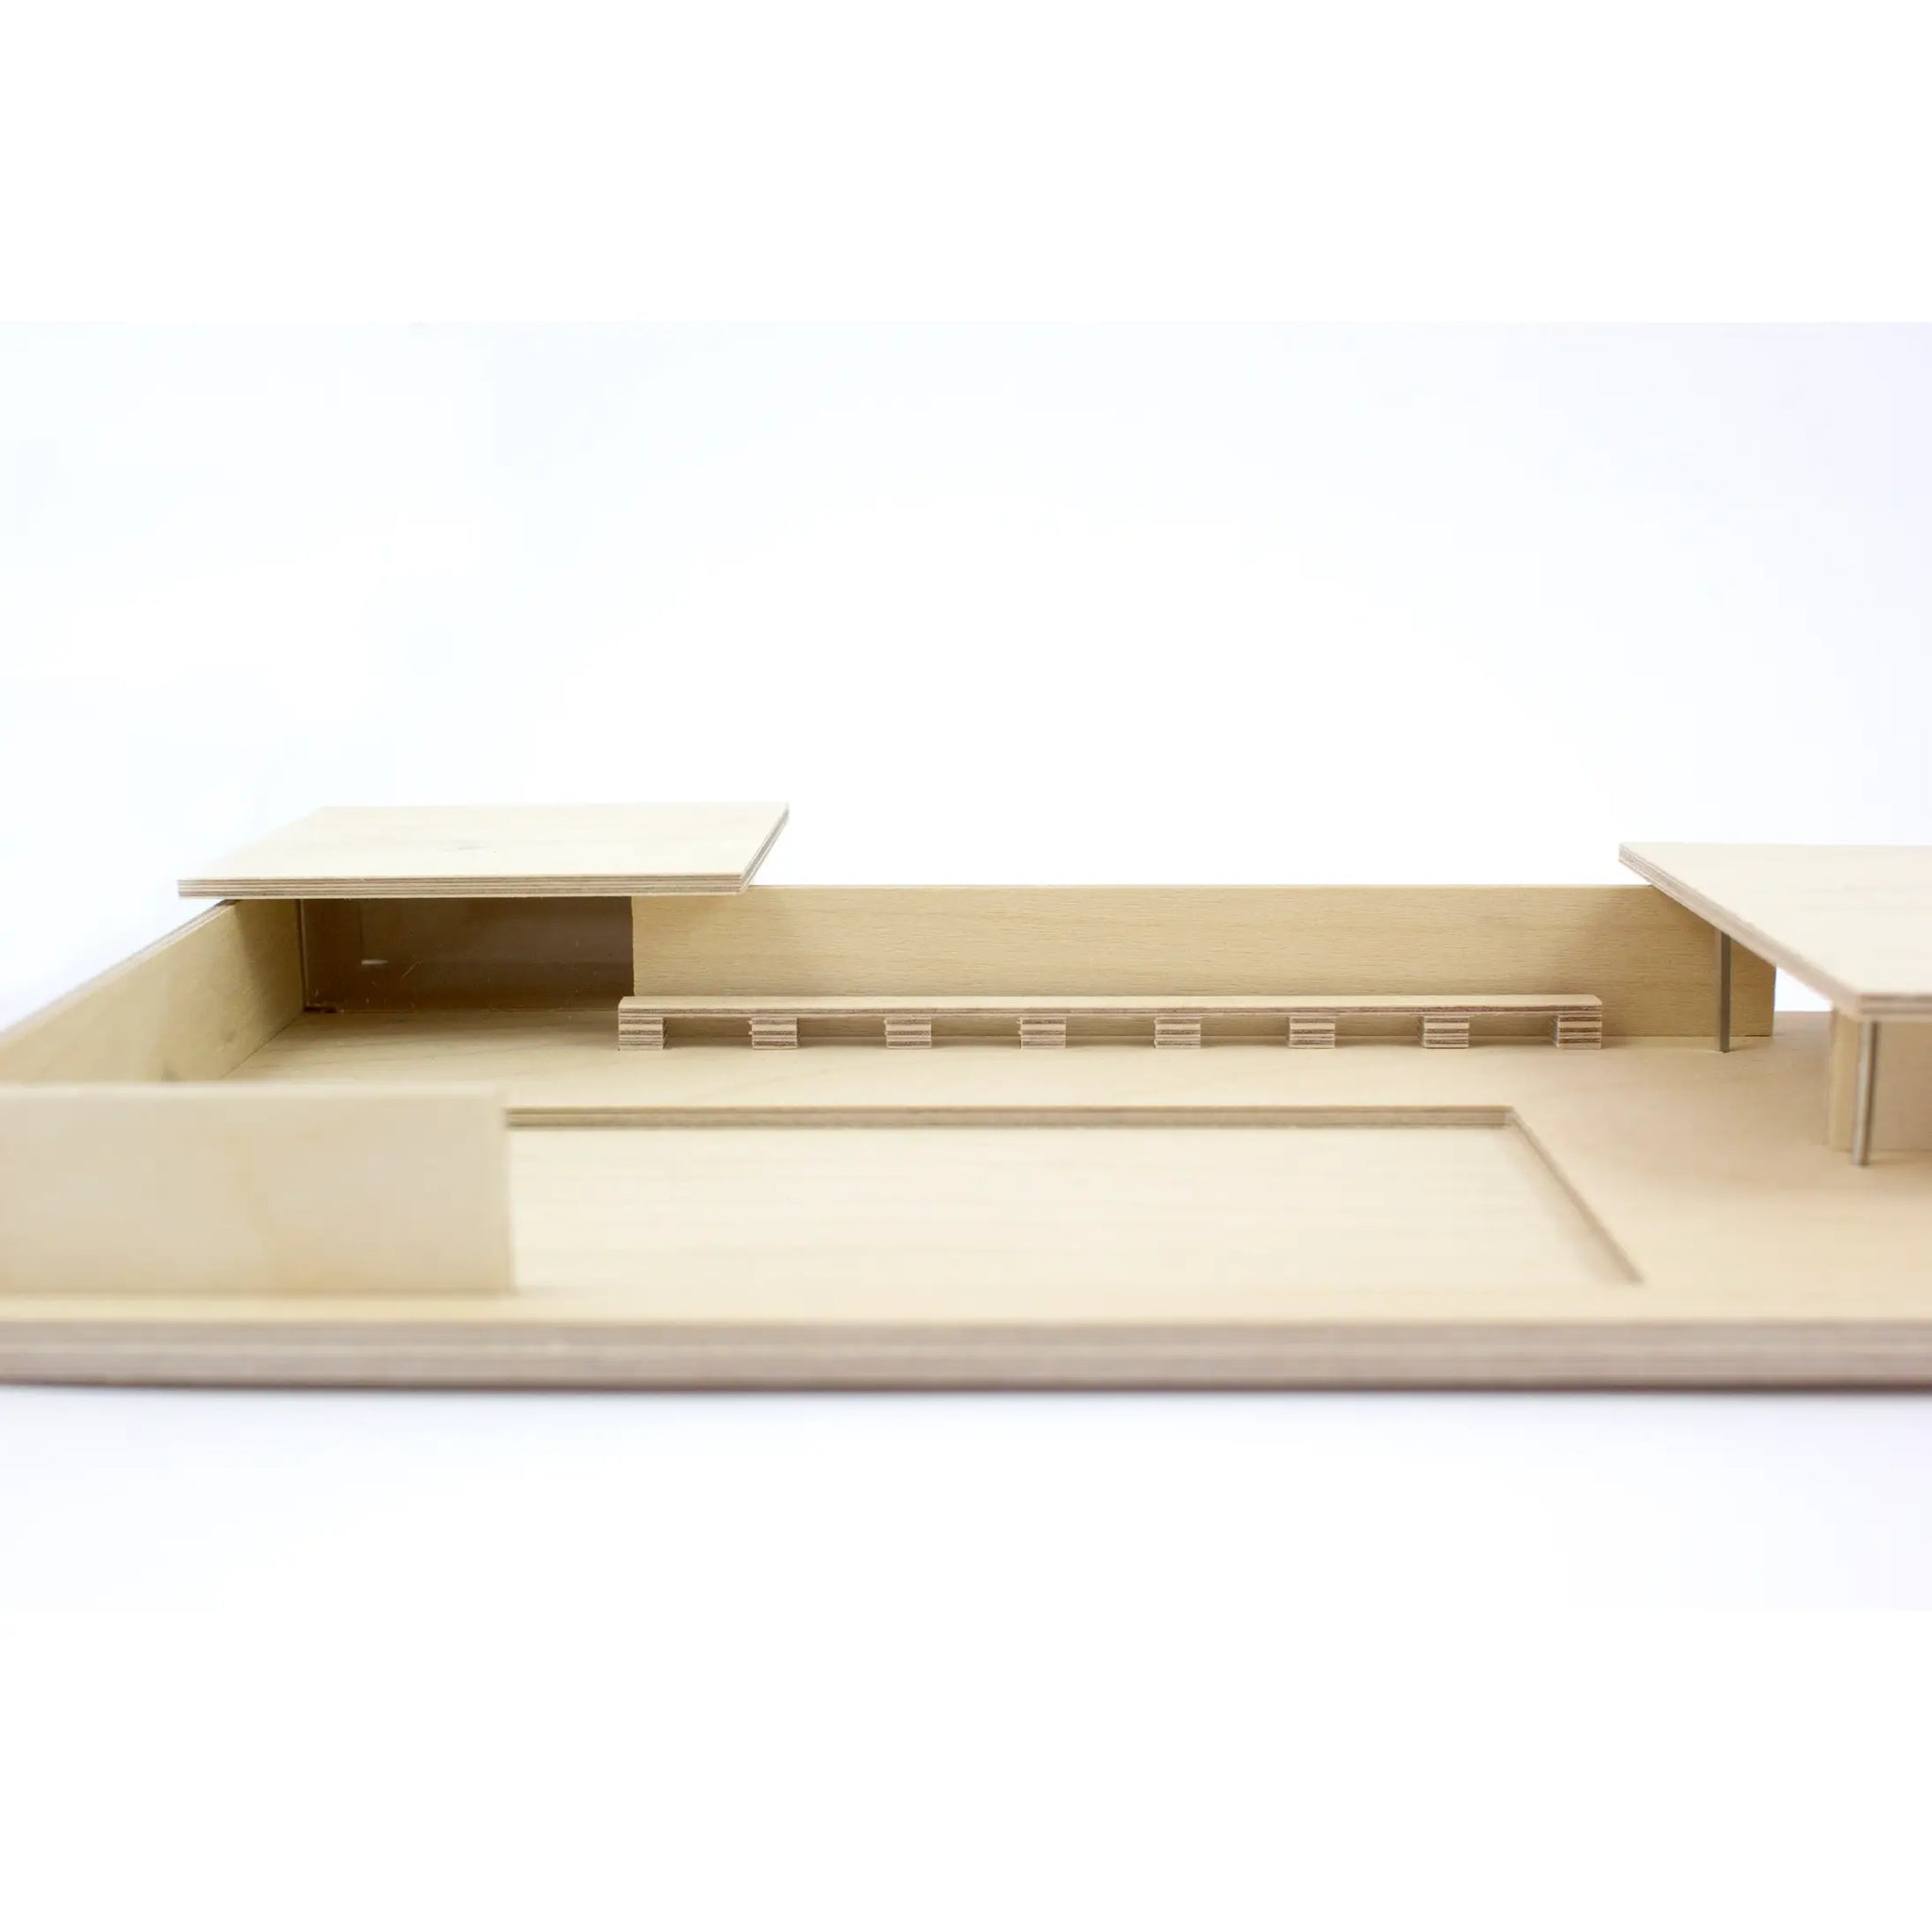 Mies Barcelona Pavilion DIY Model 1:150 Architecture Scale